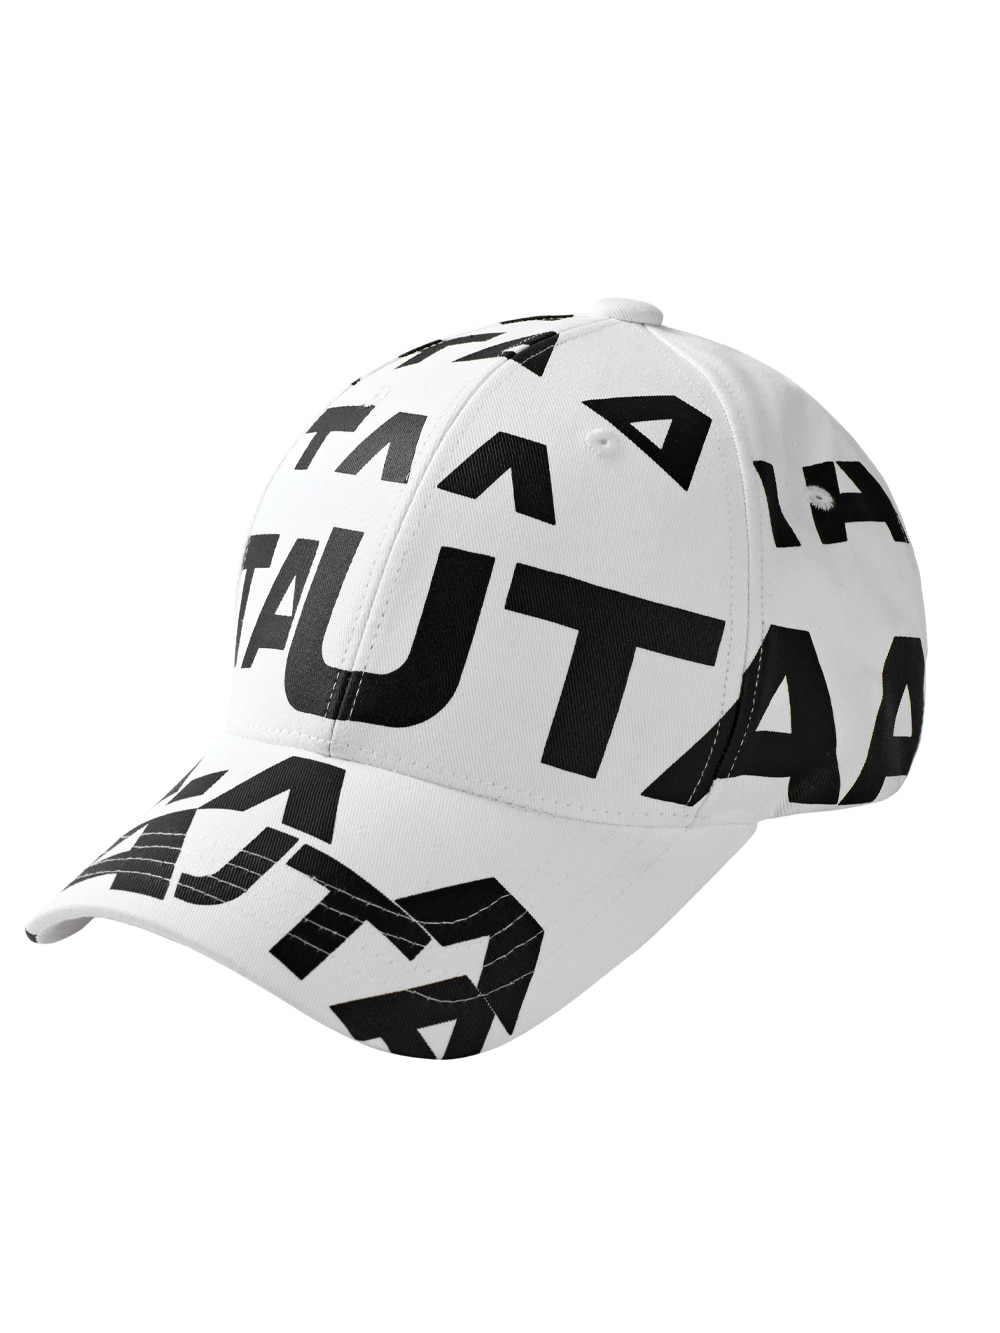 UTAA Hacking Logo Cap : White (UB0GCU113WH)